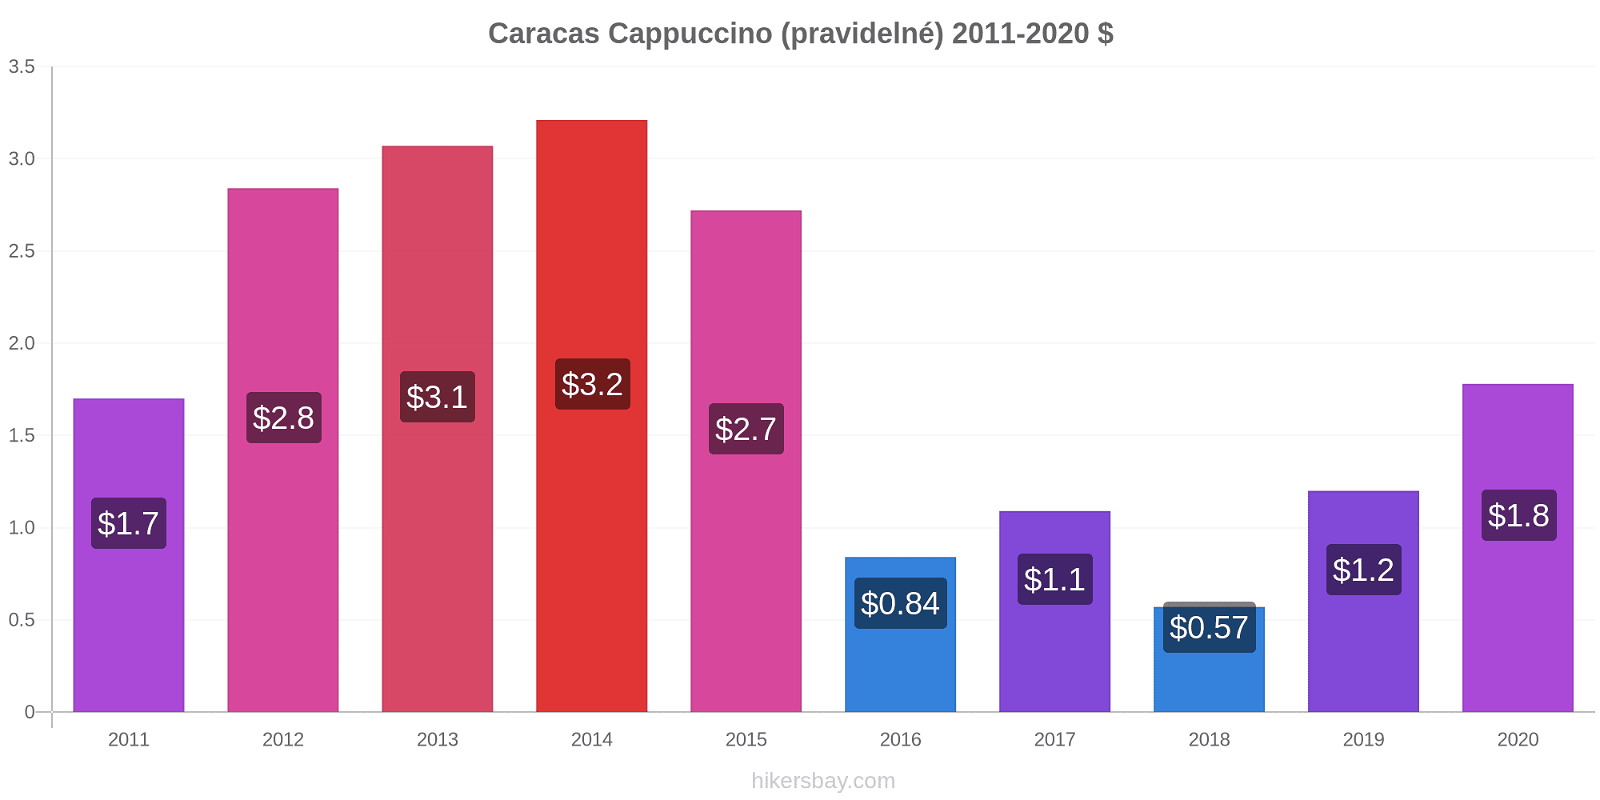 Caracas změny cen Cappuccino (pravidelné) hikersbay.com